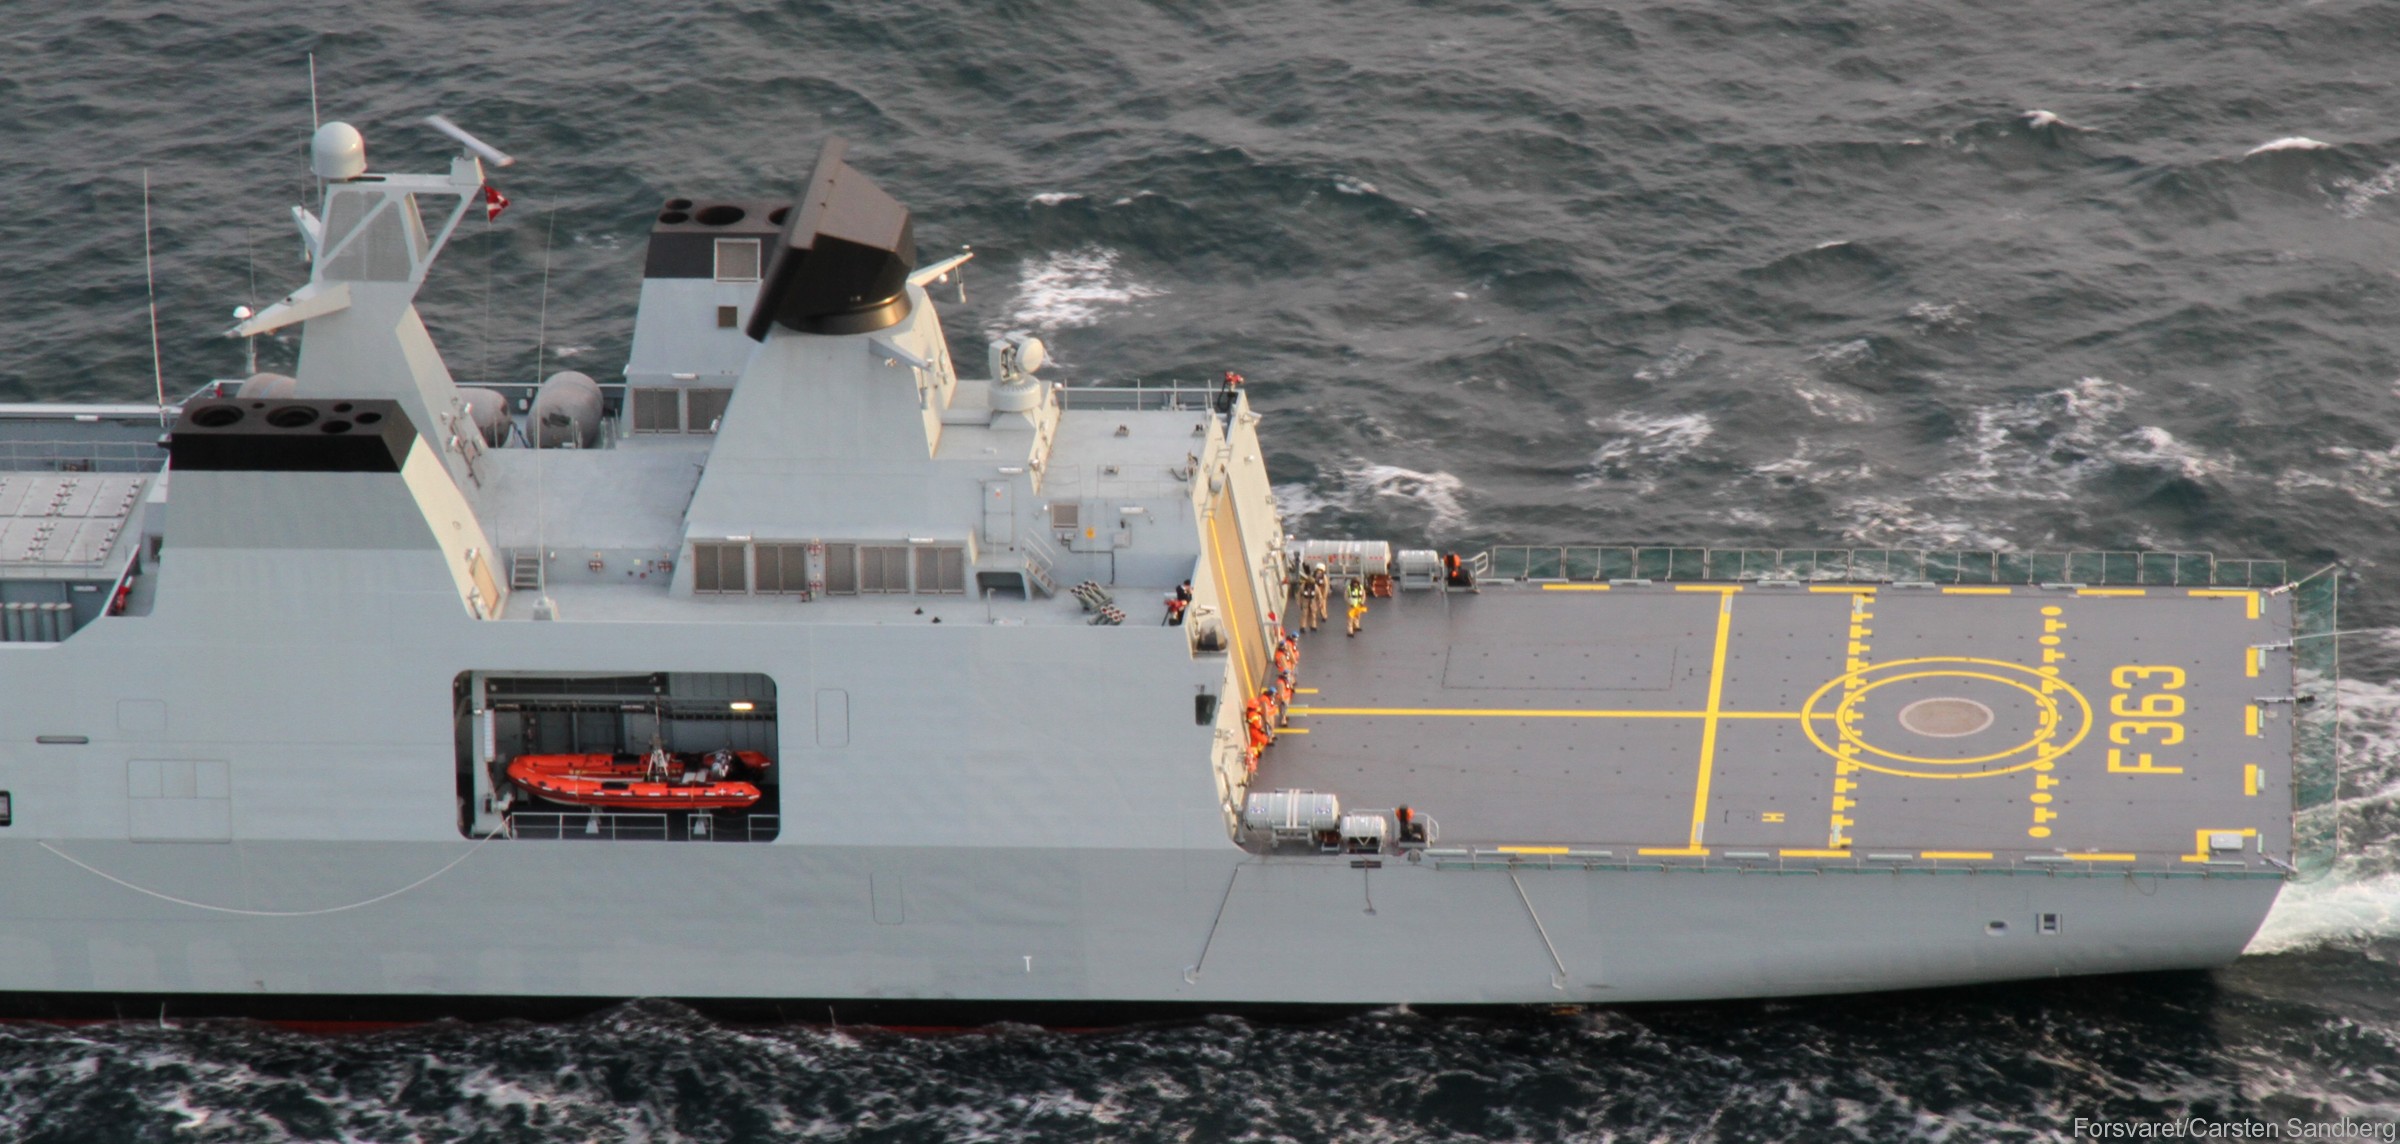 iver huitfeldt class guided missile frigate royal danish navy 44 flight deck